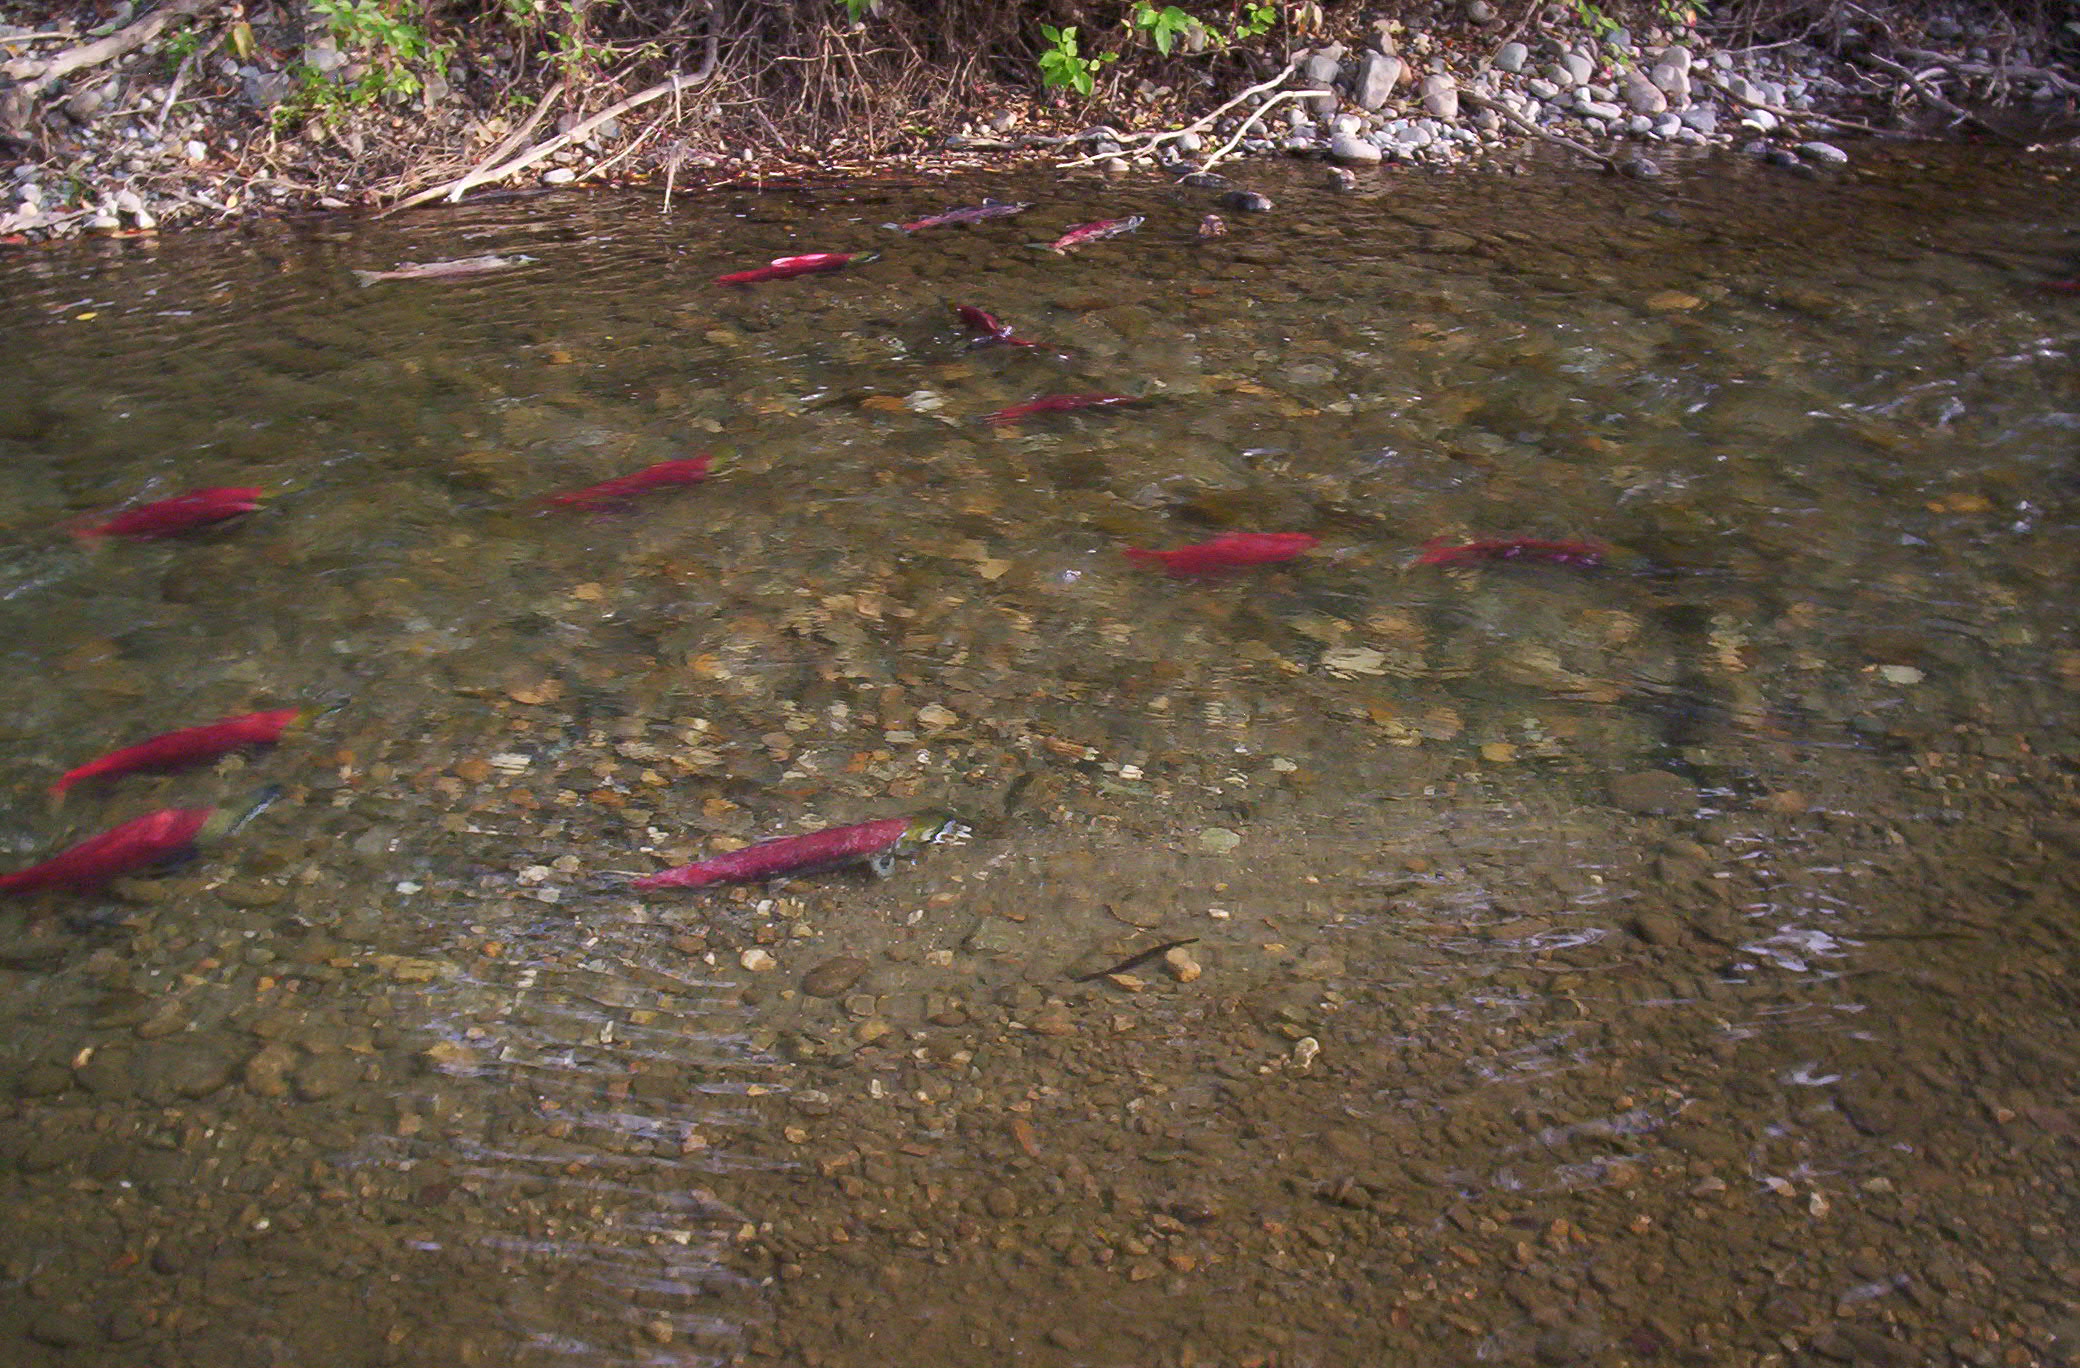 GUEST BLOG: Salmon Feedlots in British Columbia Wreck Havoc on Wild Salmon